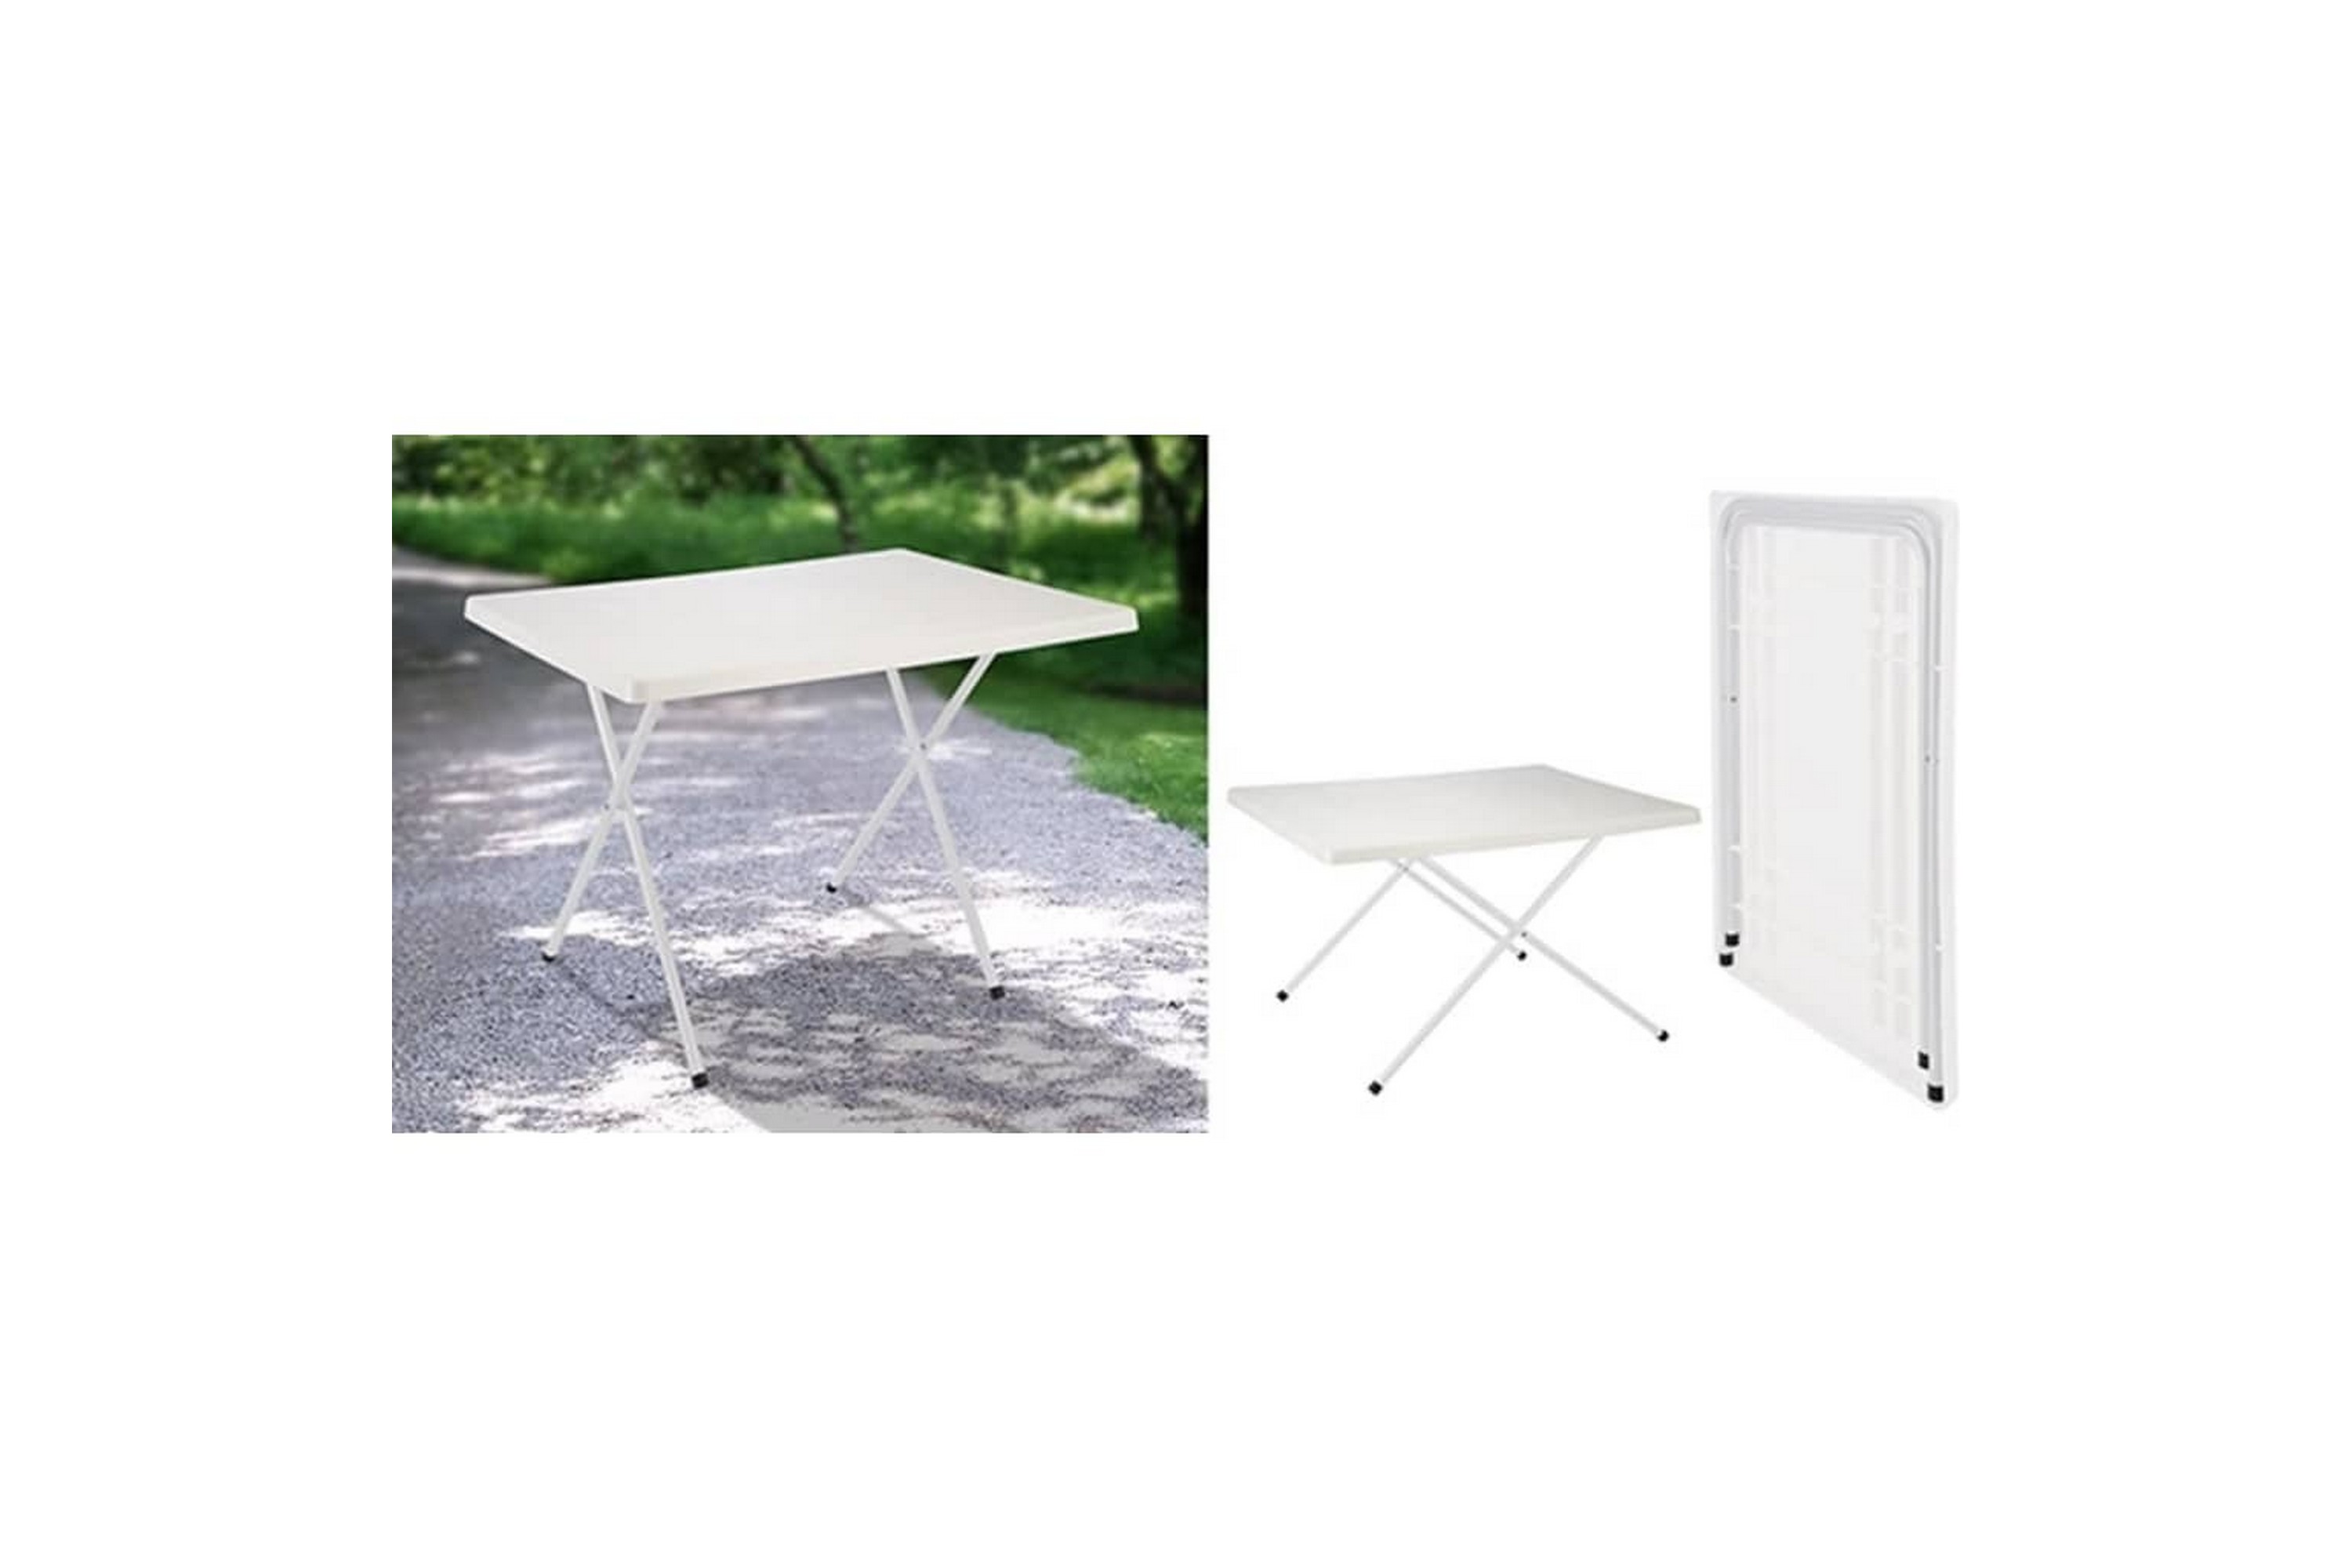 HI Sammenleggbart campingbord hvit justerbar 80x60x51/61 cm - Hvit